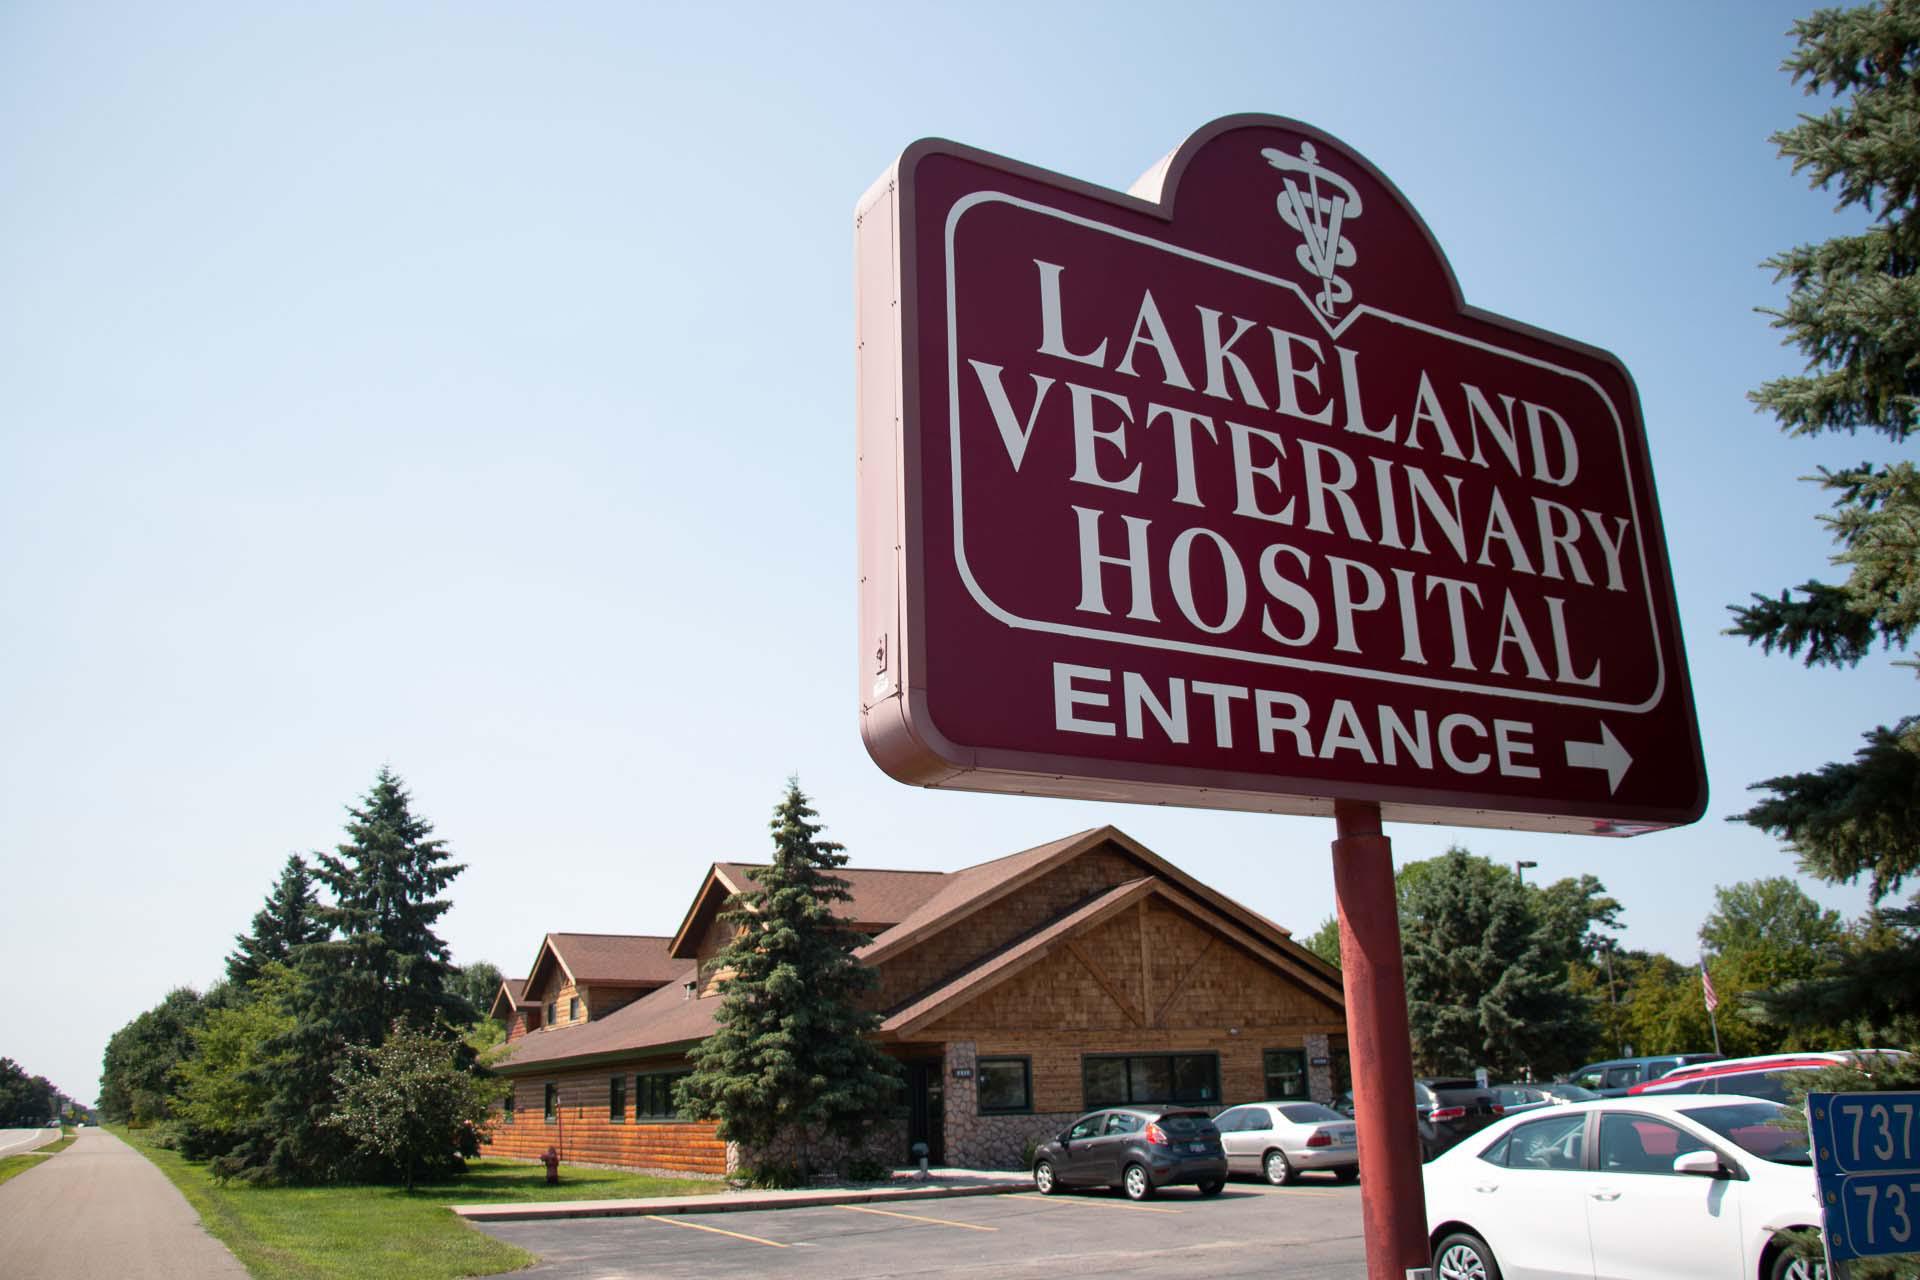 Welcome to Lakeland Veterinary Hospital!